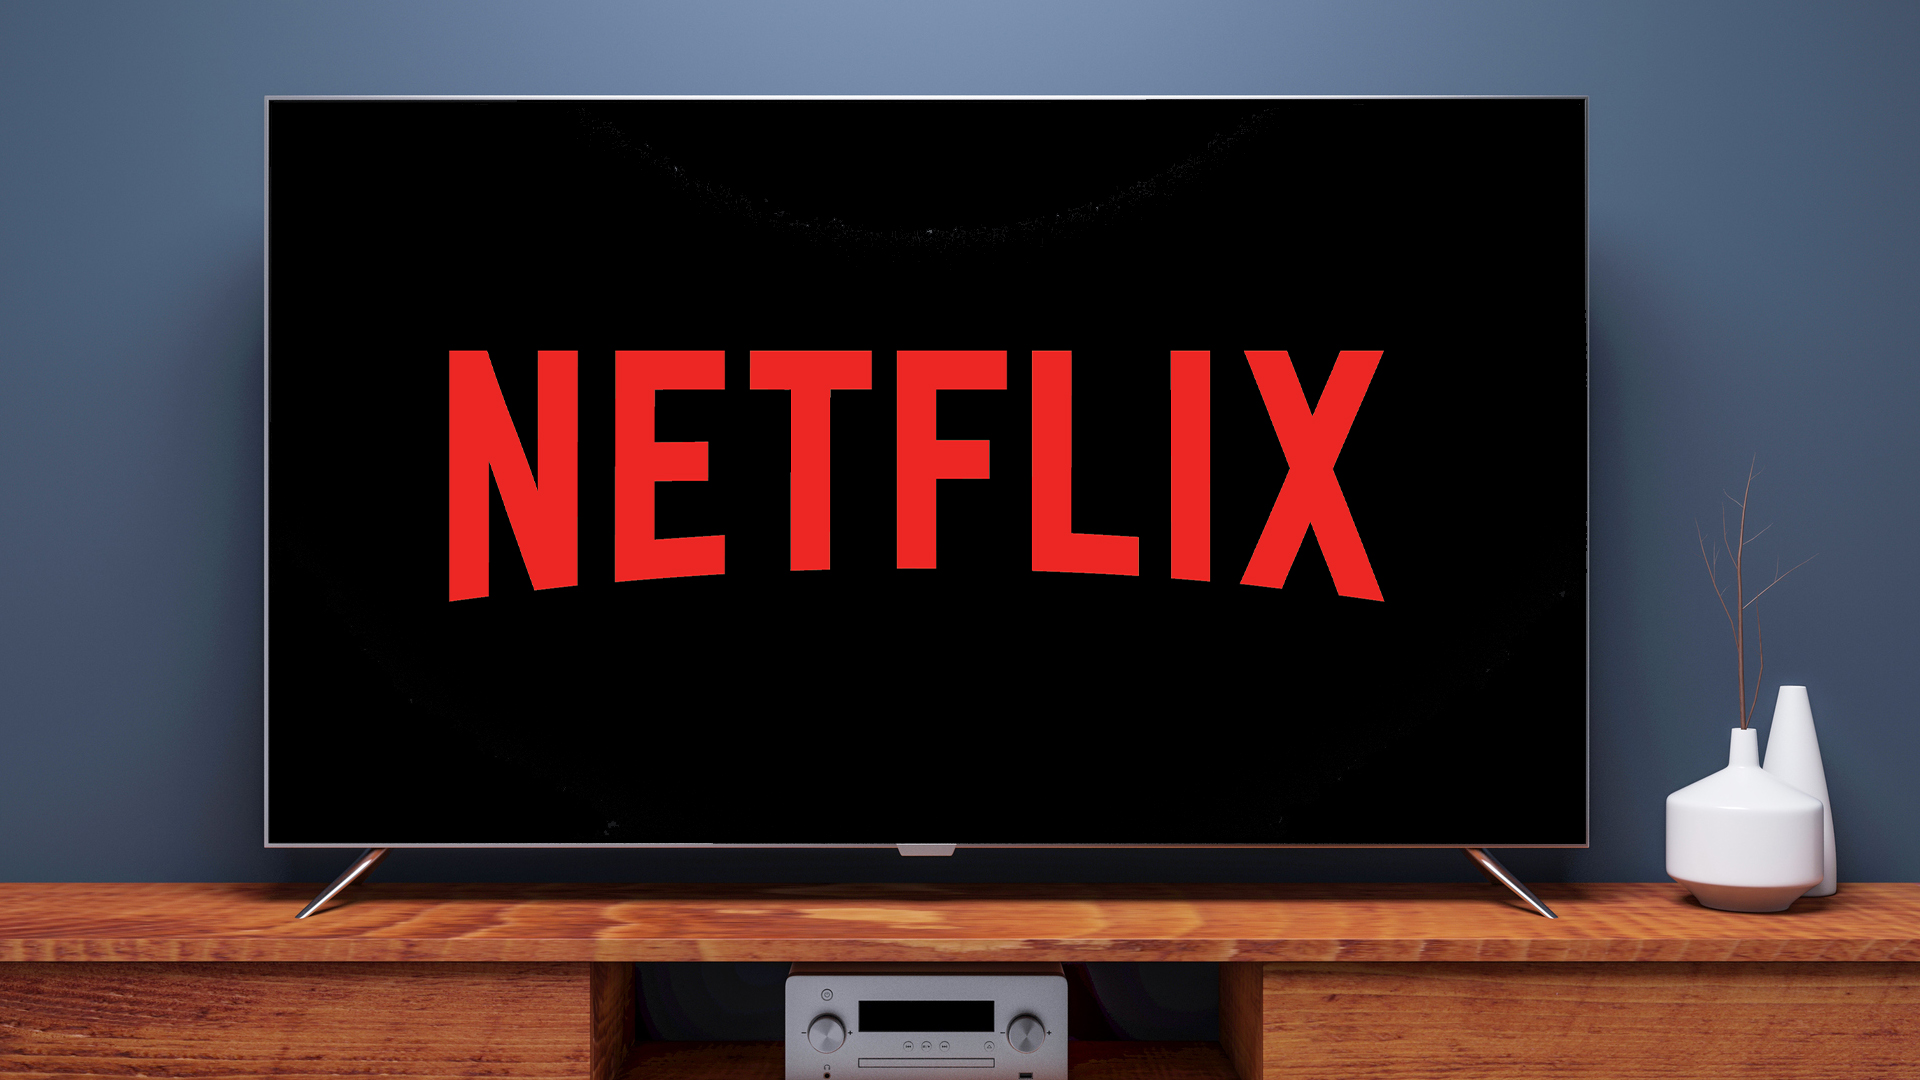 A TV showing the Netflix logo